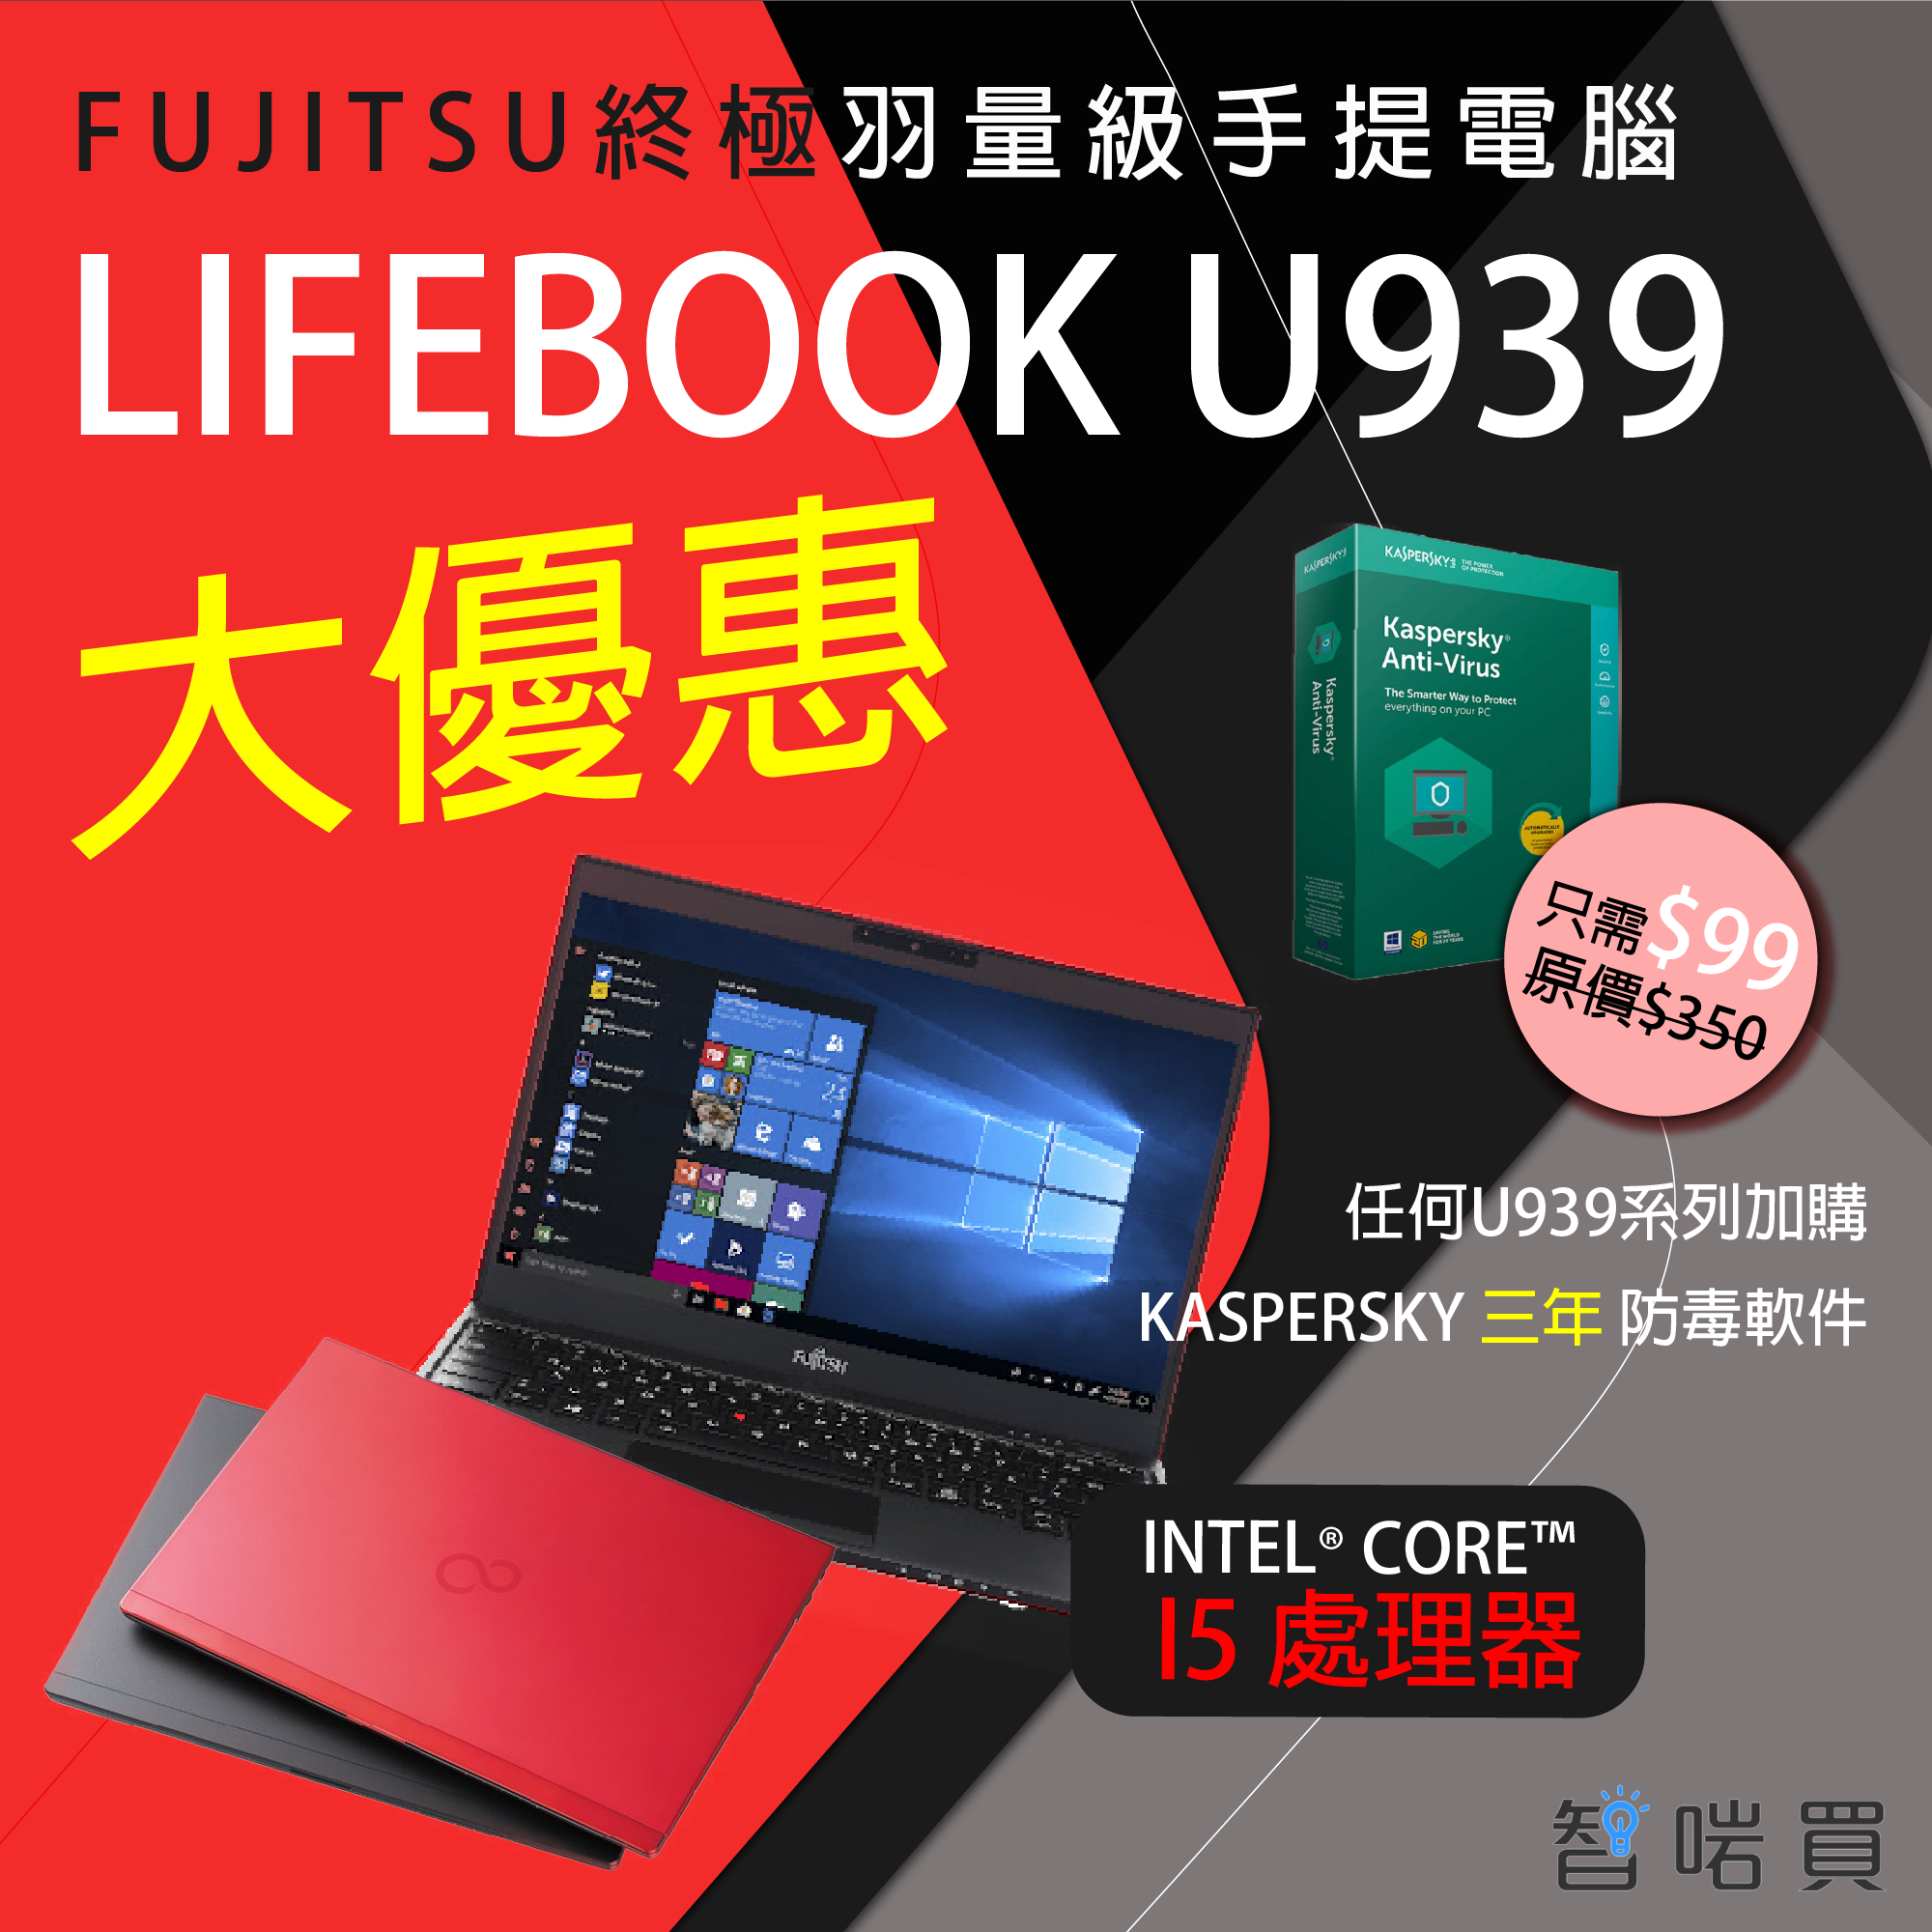 2019年発売超軽量777g Fujitsu lifebook U939/A - ノートPC